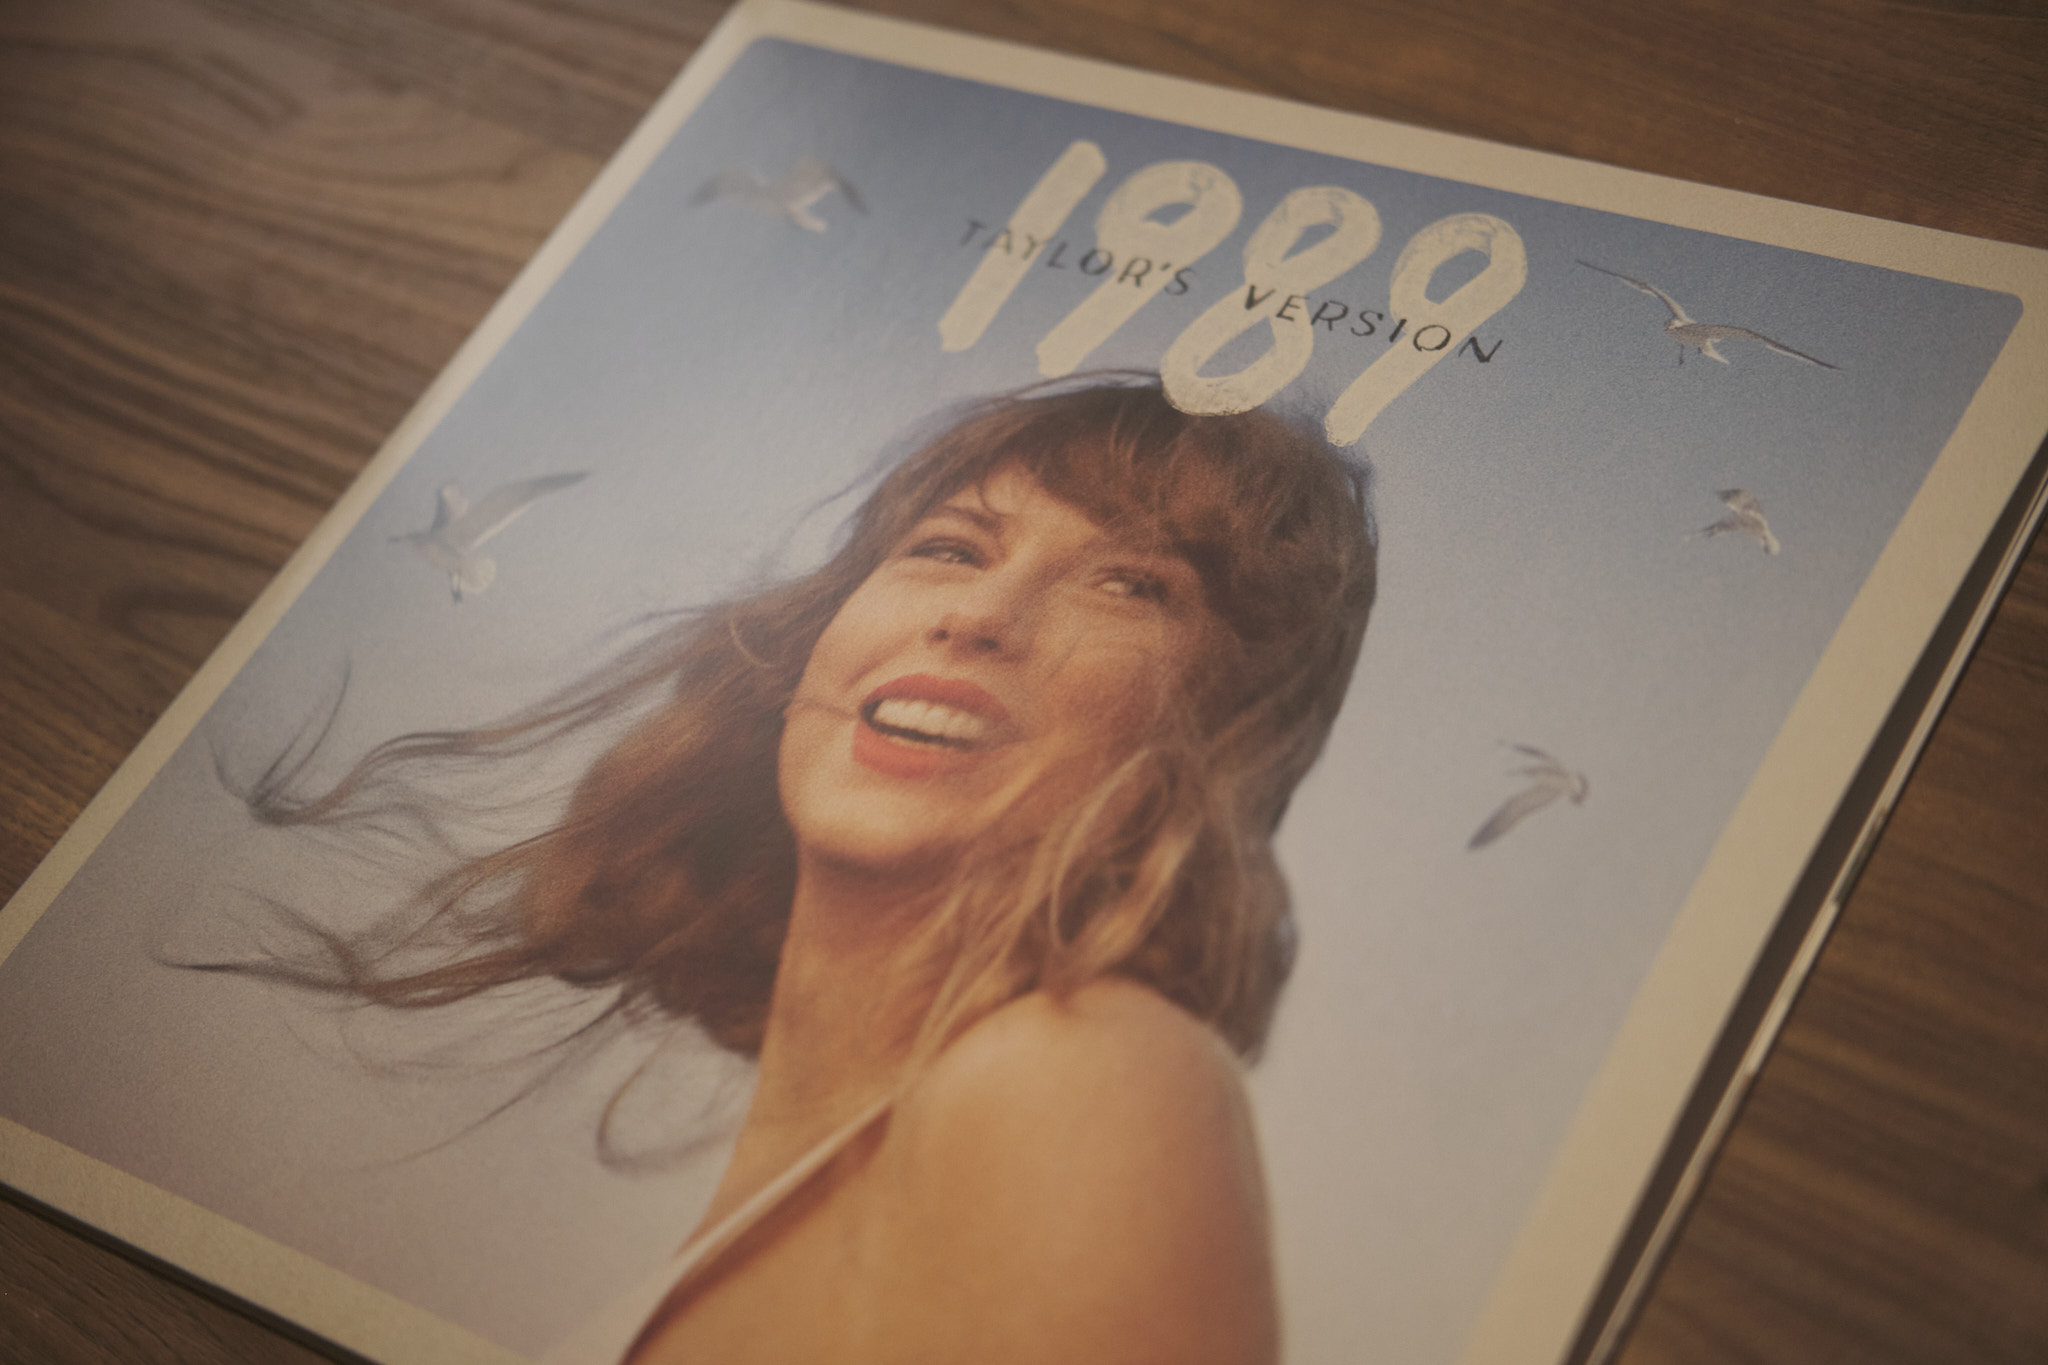 1989 Taylor's Version Vinyl Cover